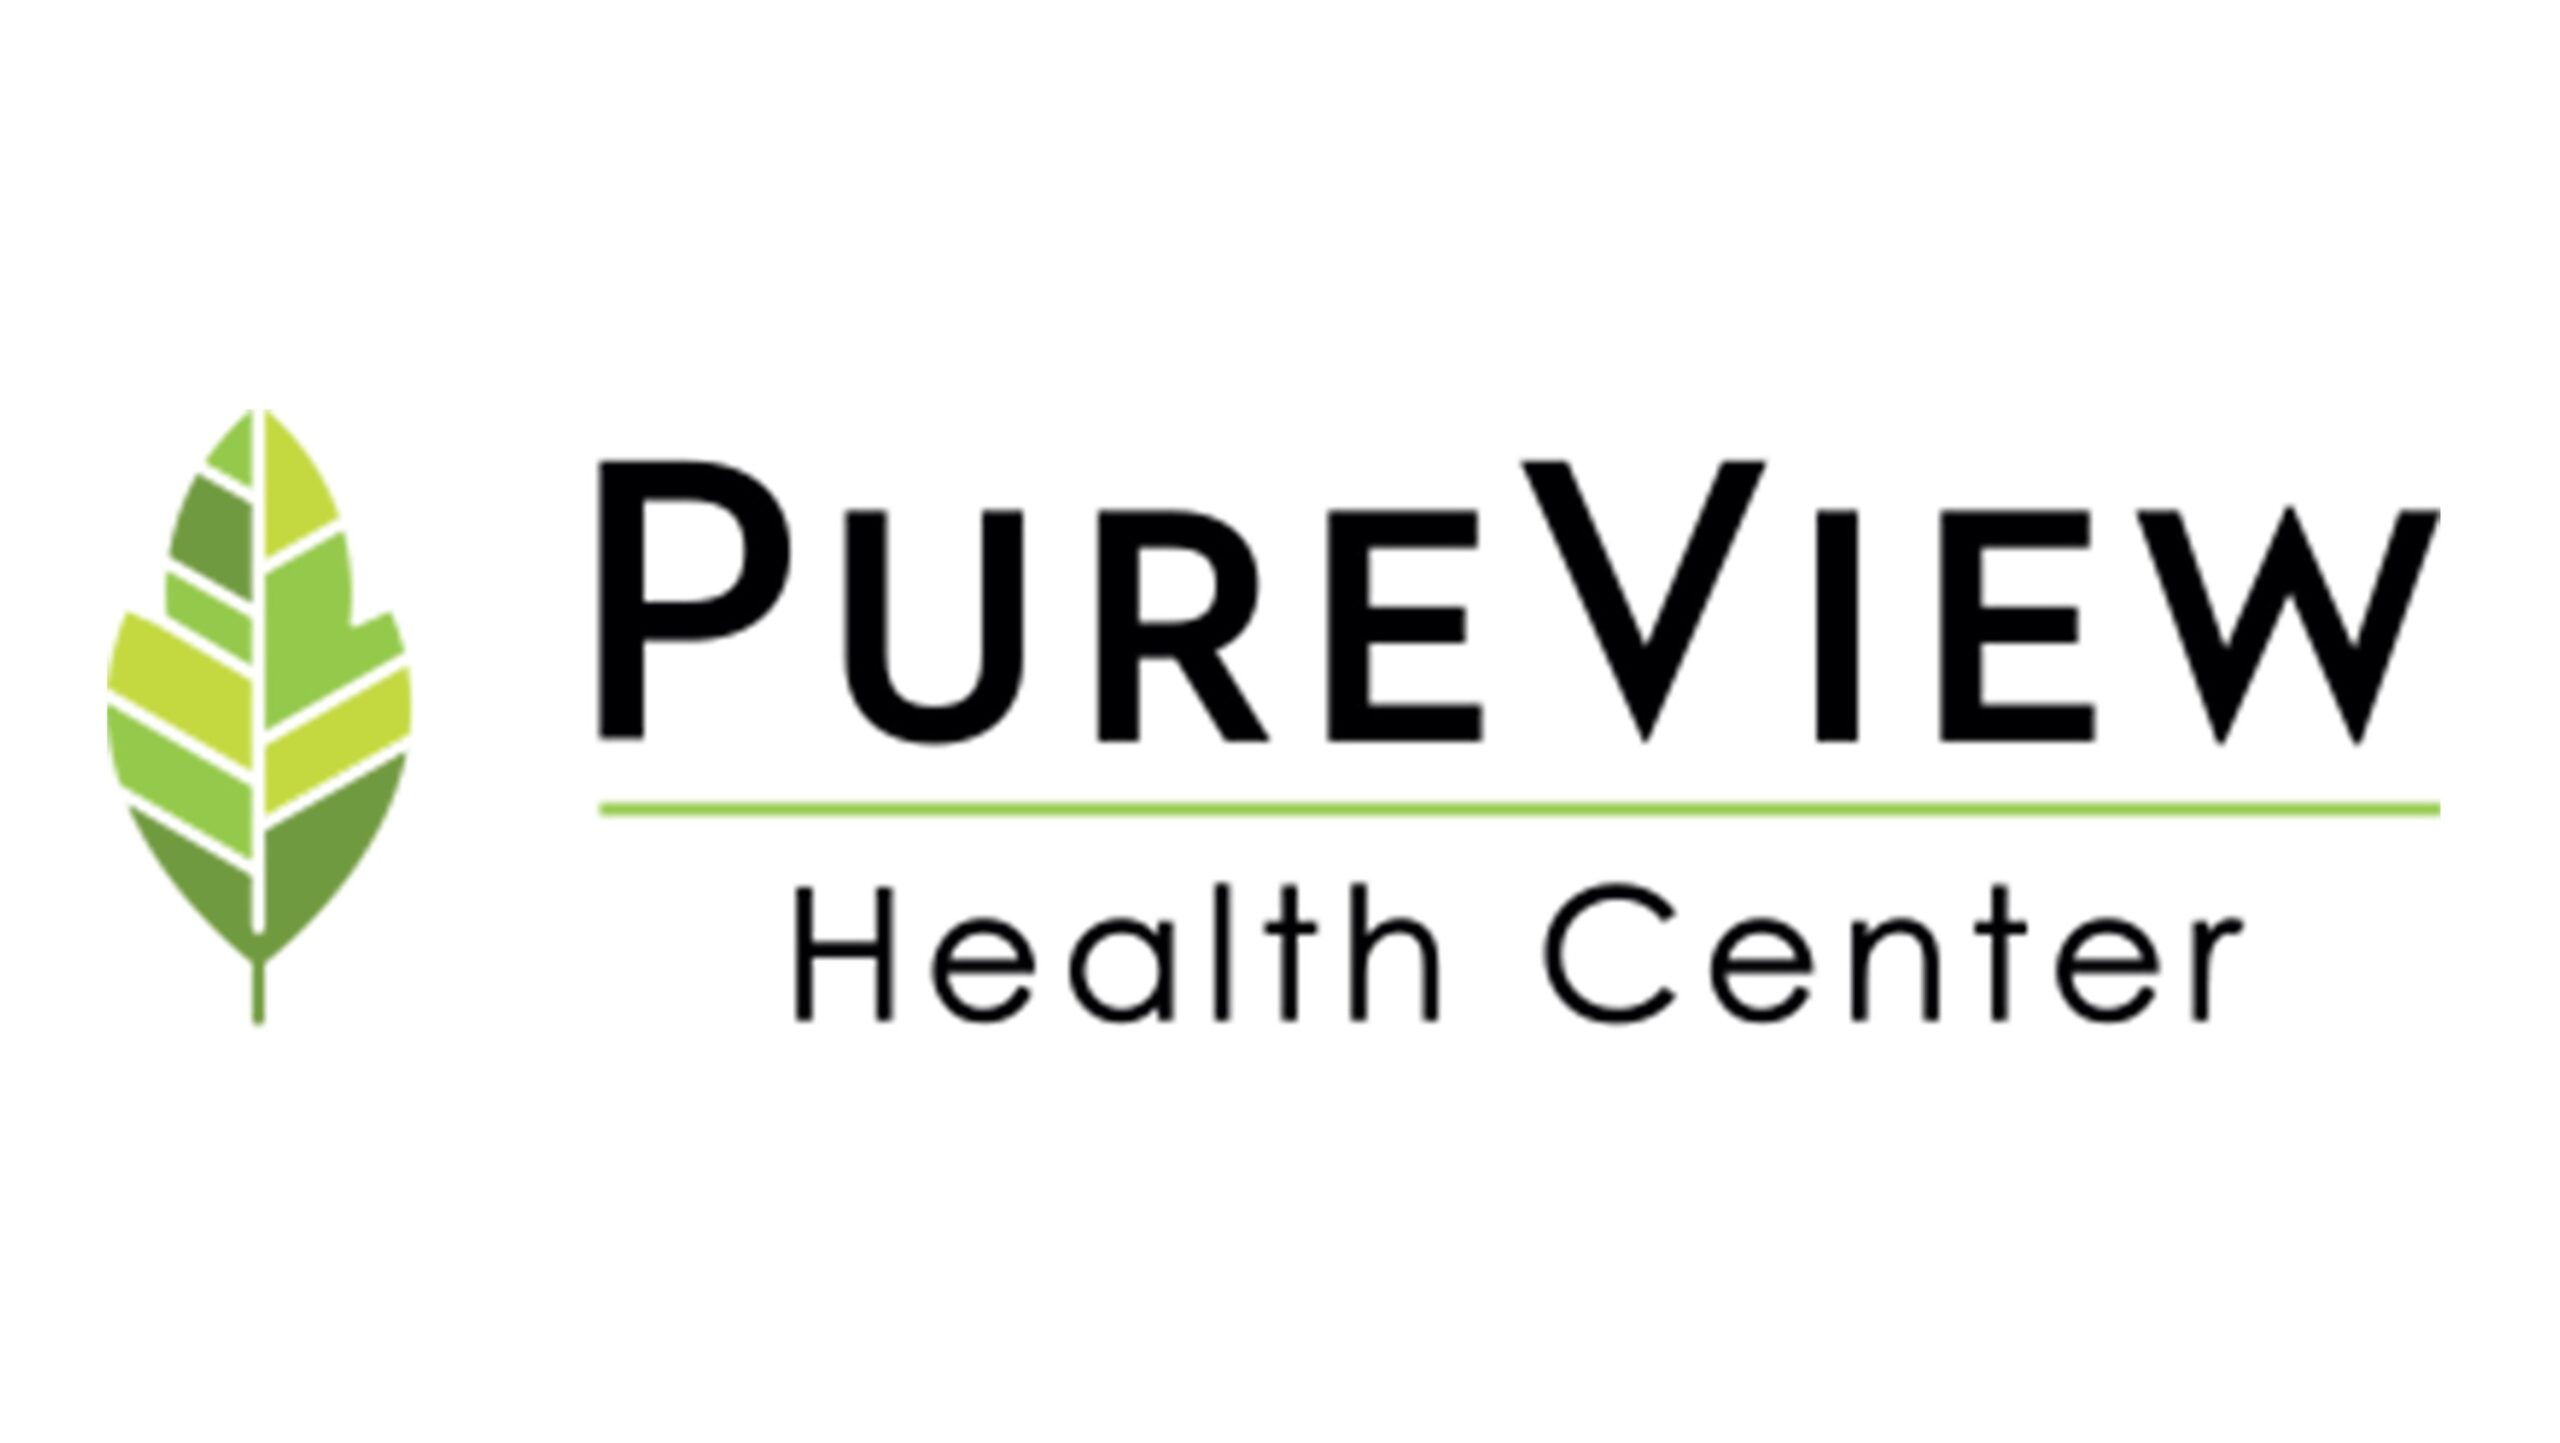 Pureview Health Center